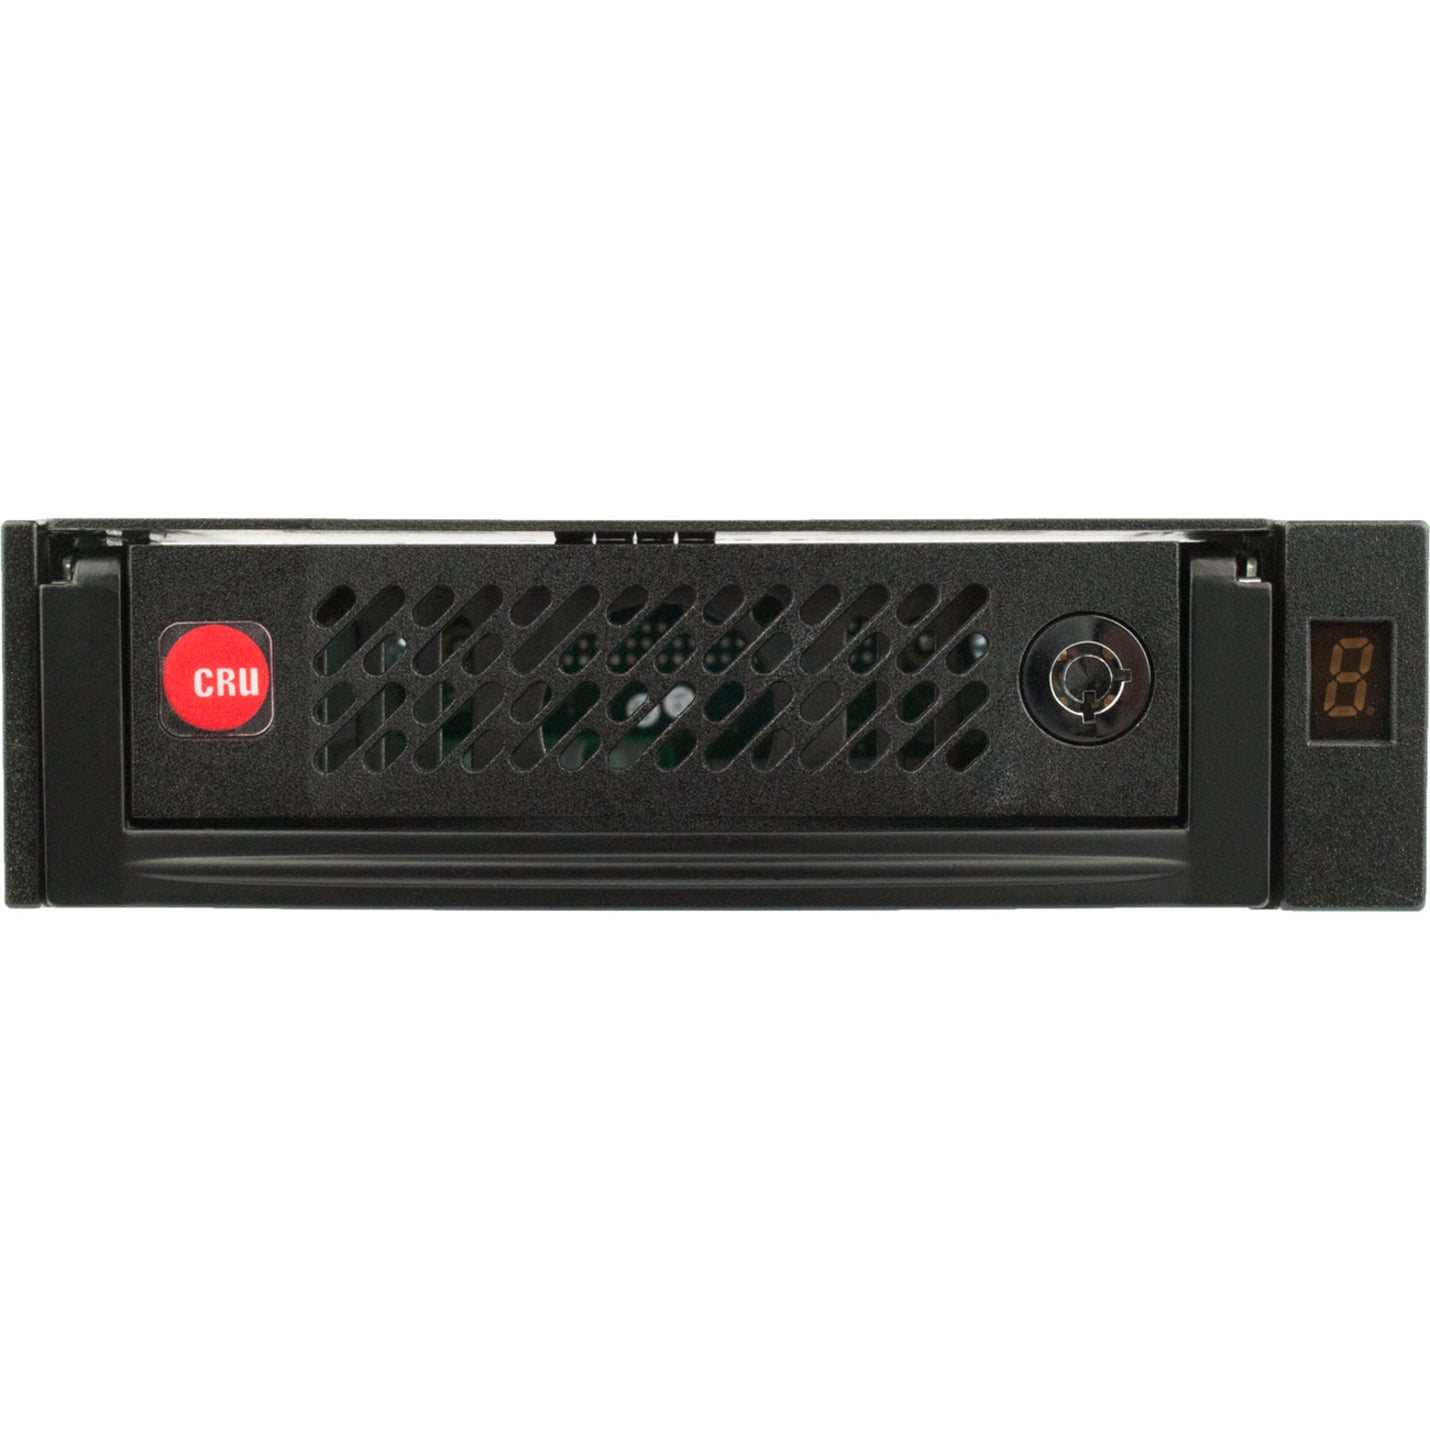 CRU 6546-6400-0500 DE110 SATA 6G Complete Assembly, Includes Frame and Carrier for SATA Drives, Black